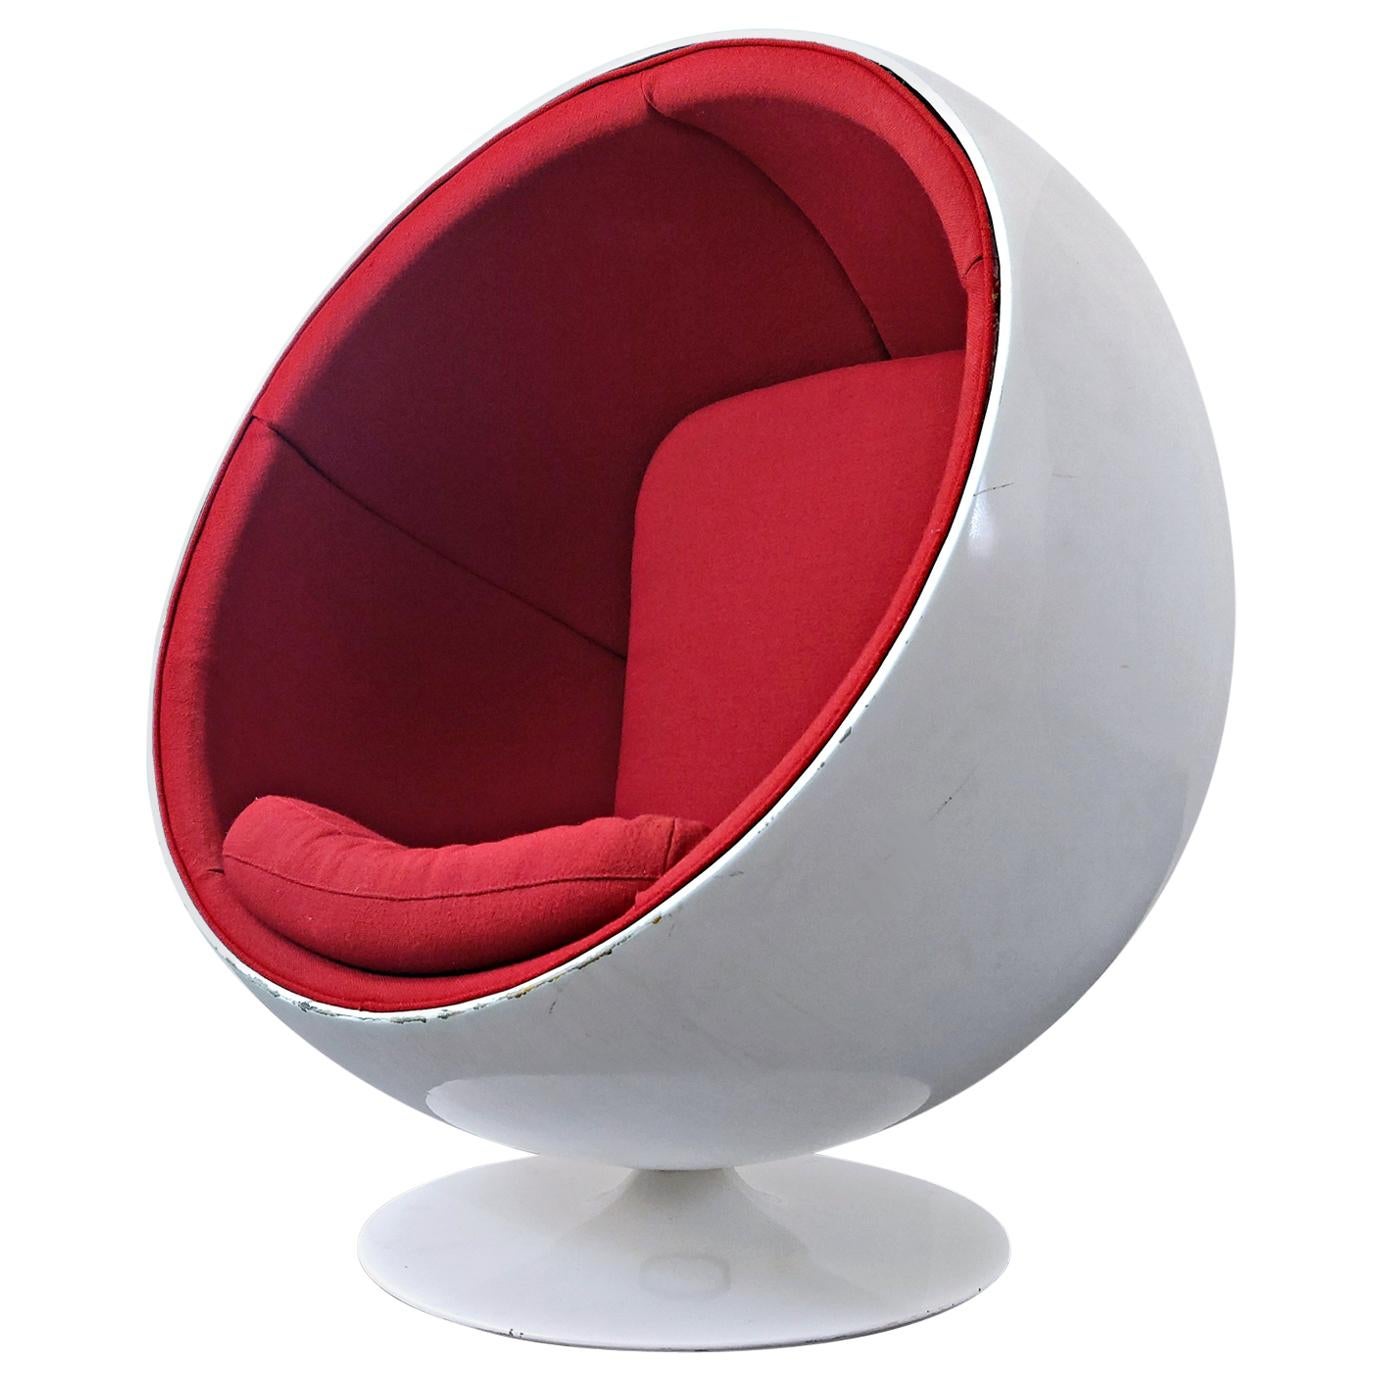 Swivel Ball Chair Attributed to Eero Aarnio